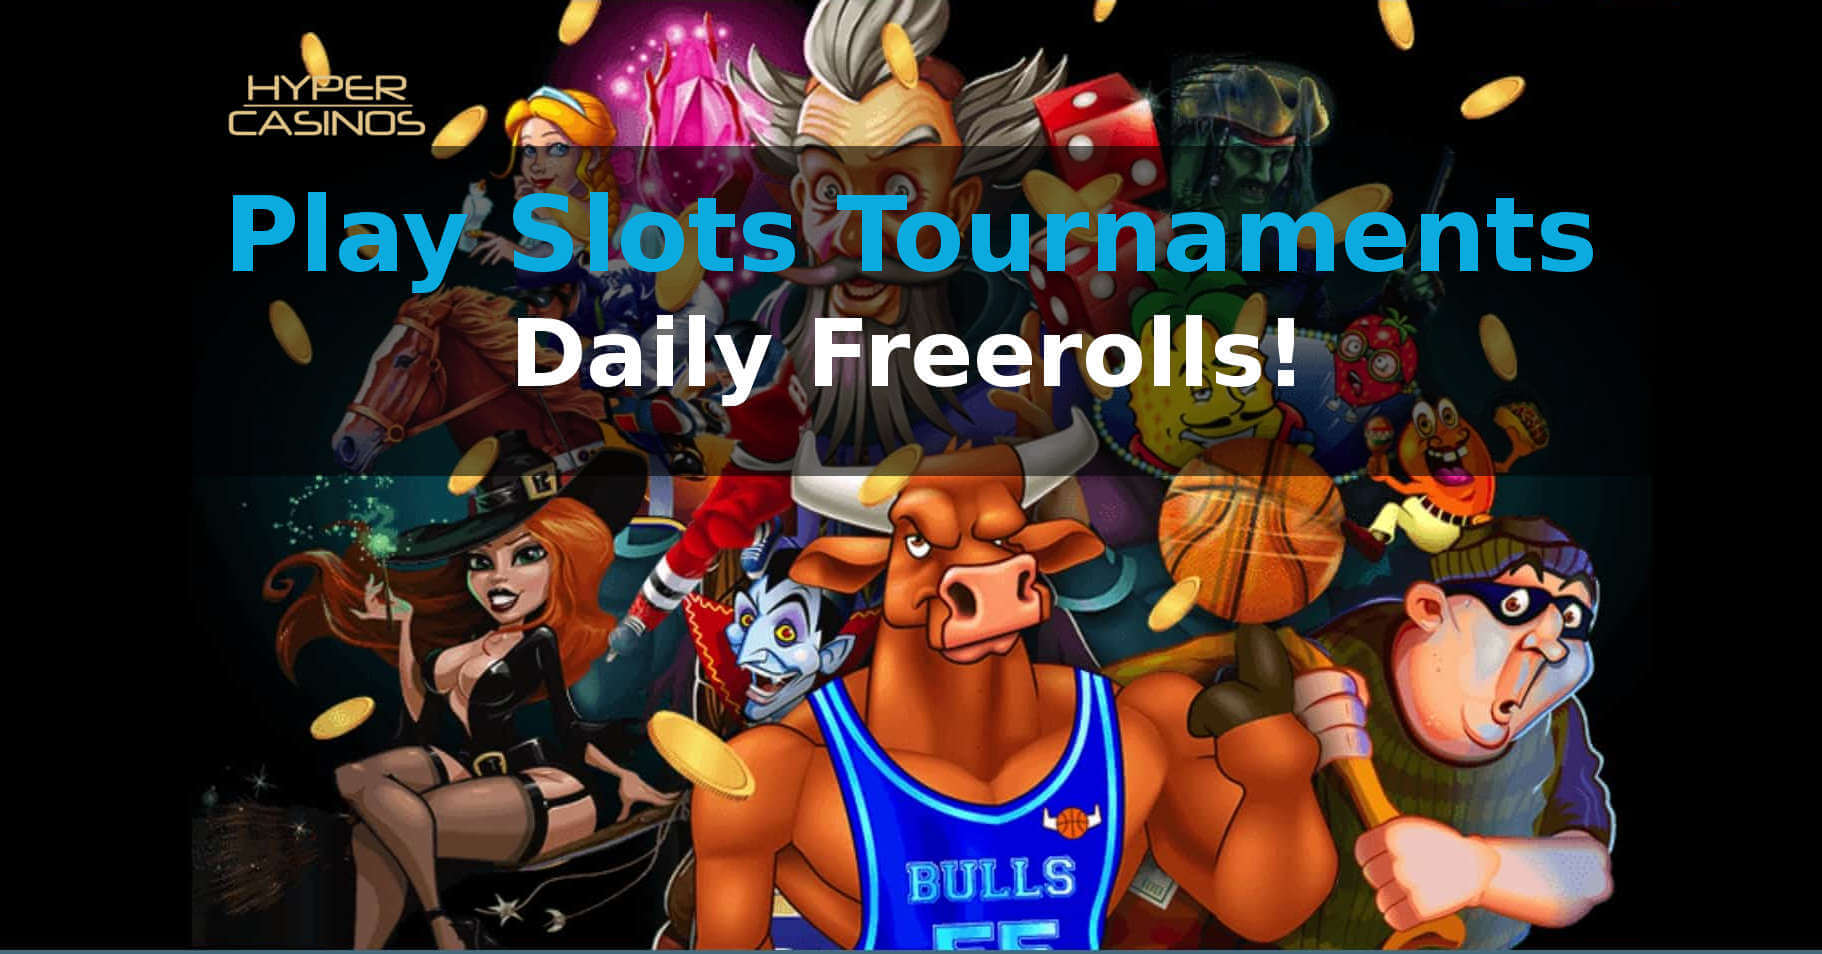 Freroll Slots Tournaments USA